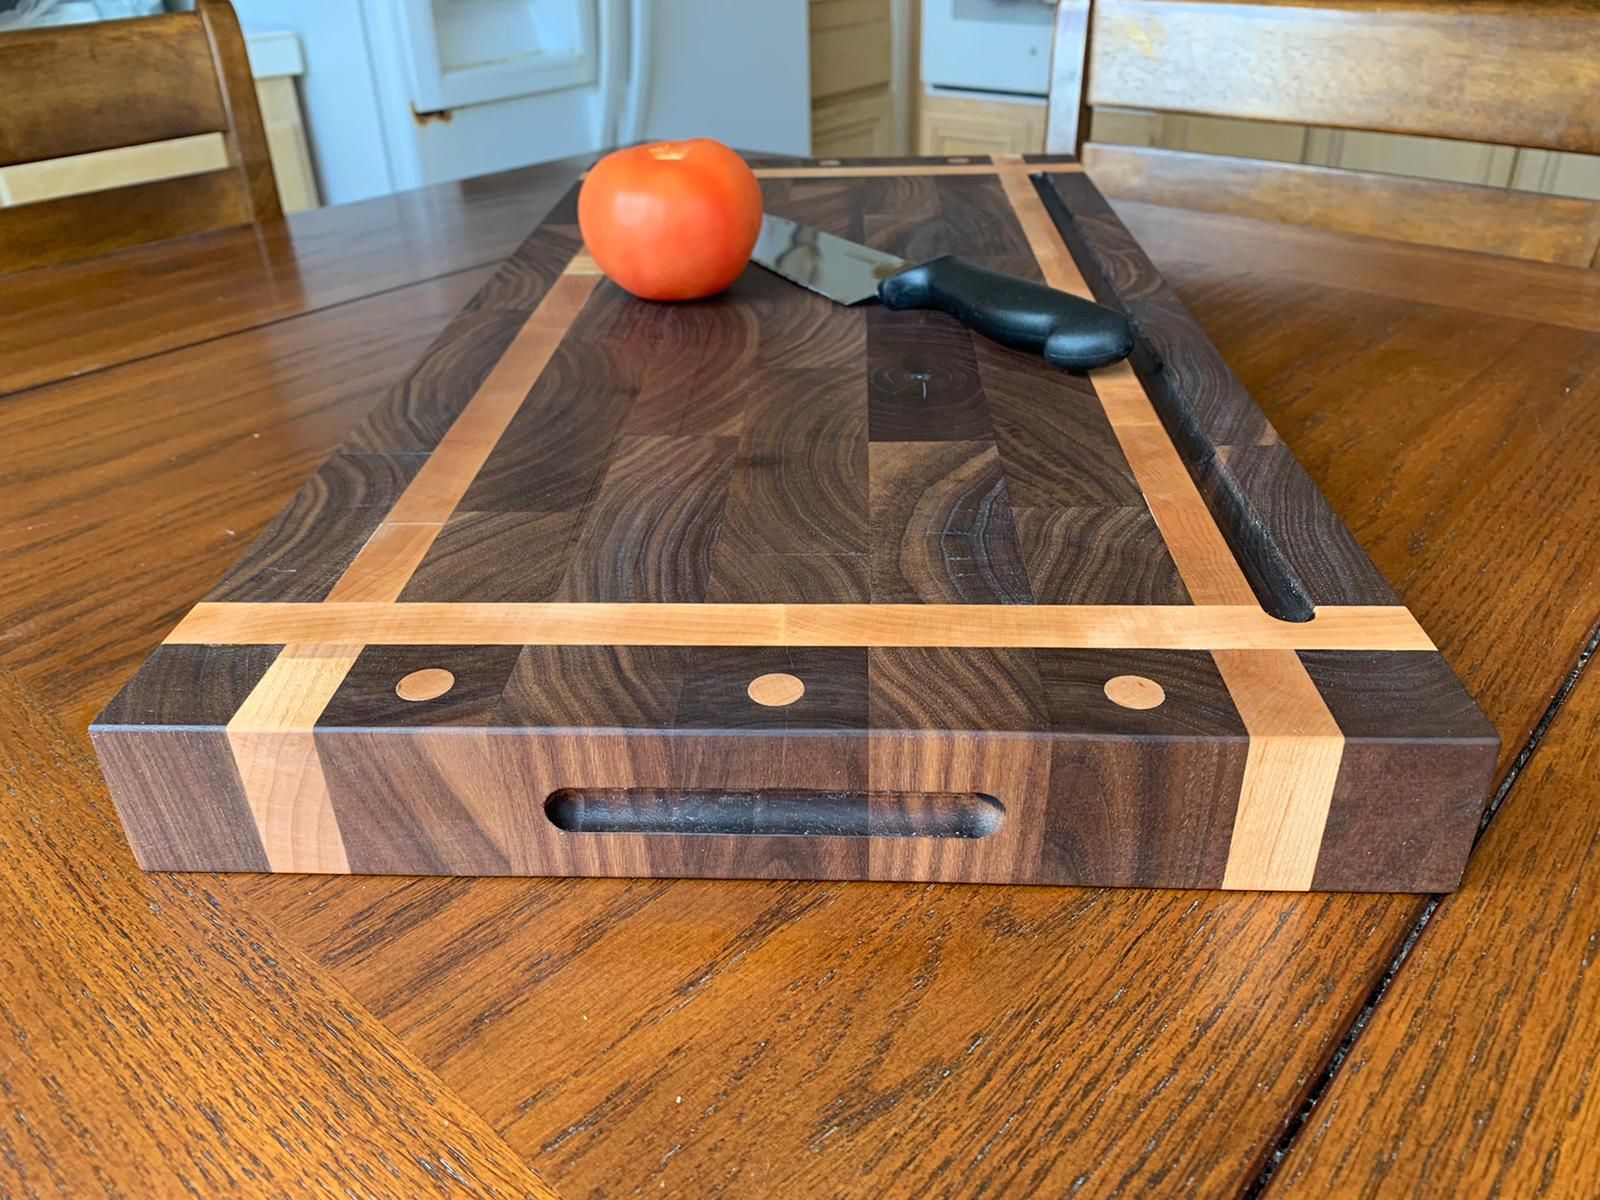 Handmade Maple Cutting Board